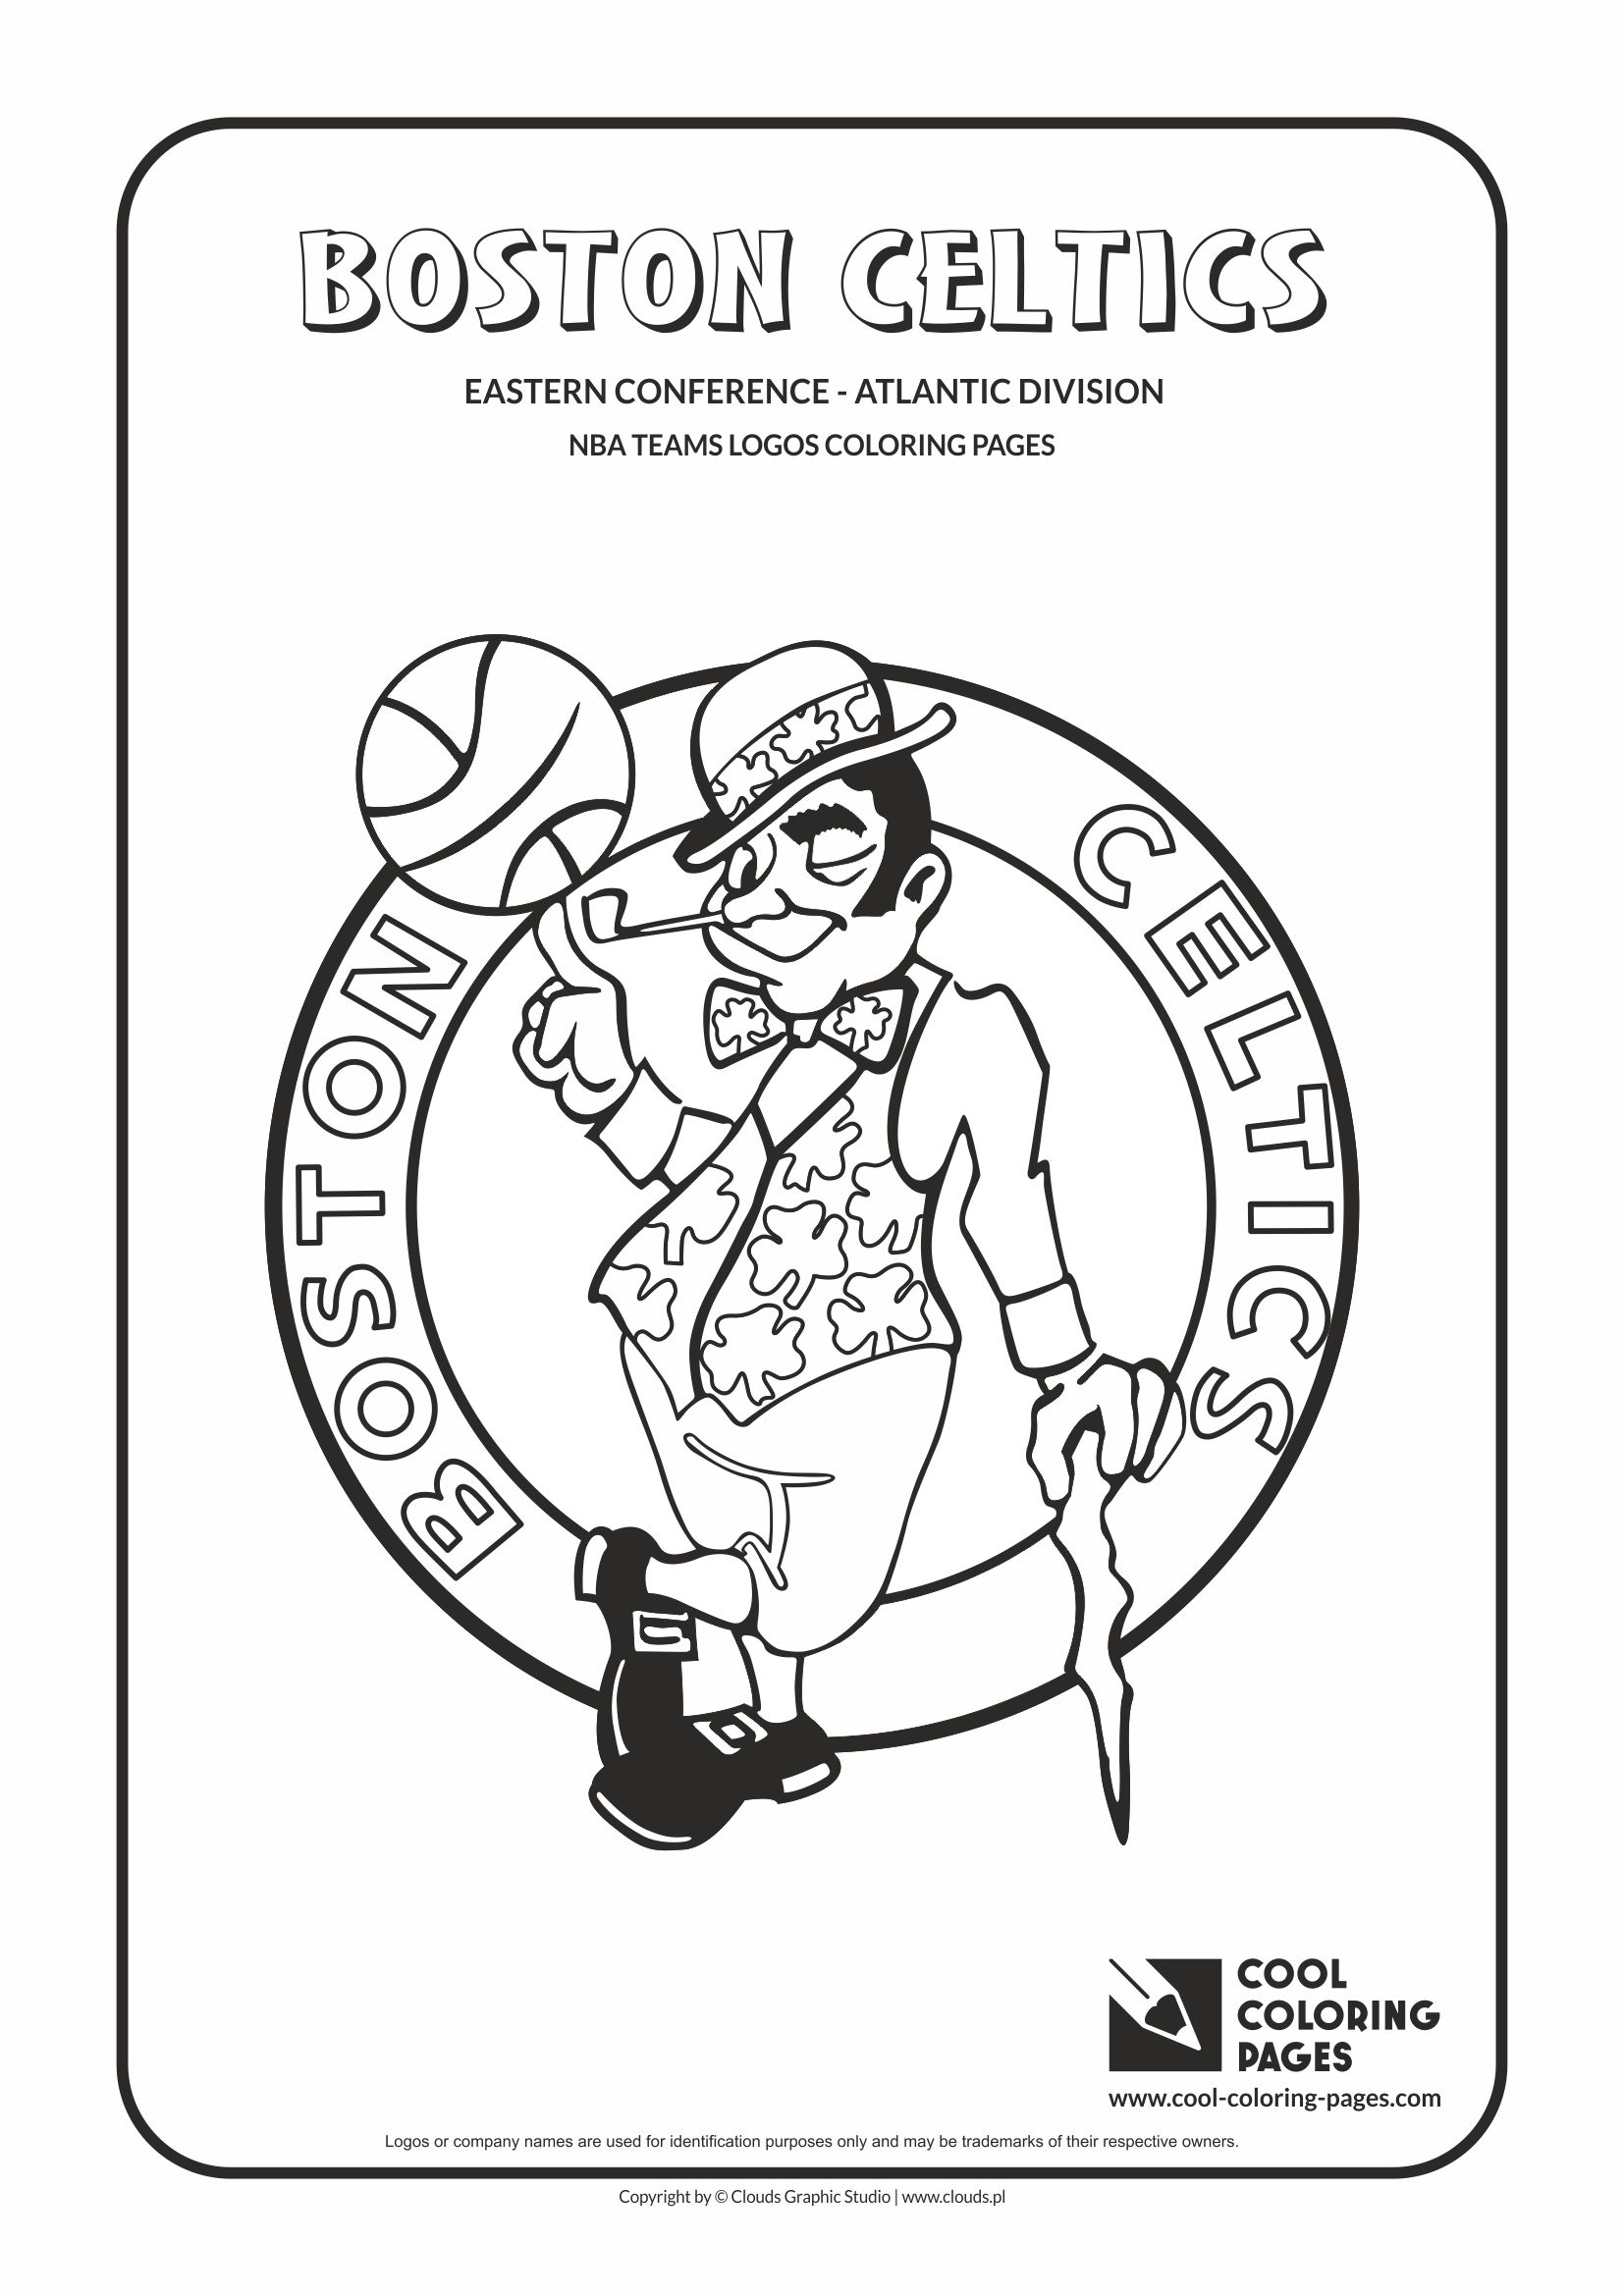 Cool Coloring Pages - NBA Teams Logos / Boston Celtics logo / Coloring page with Boston Celtics logo